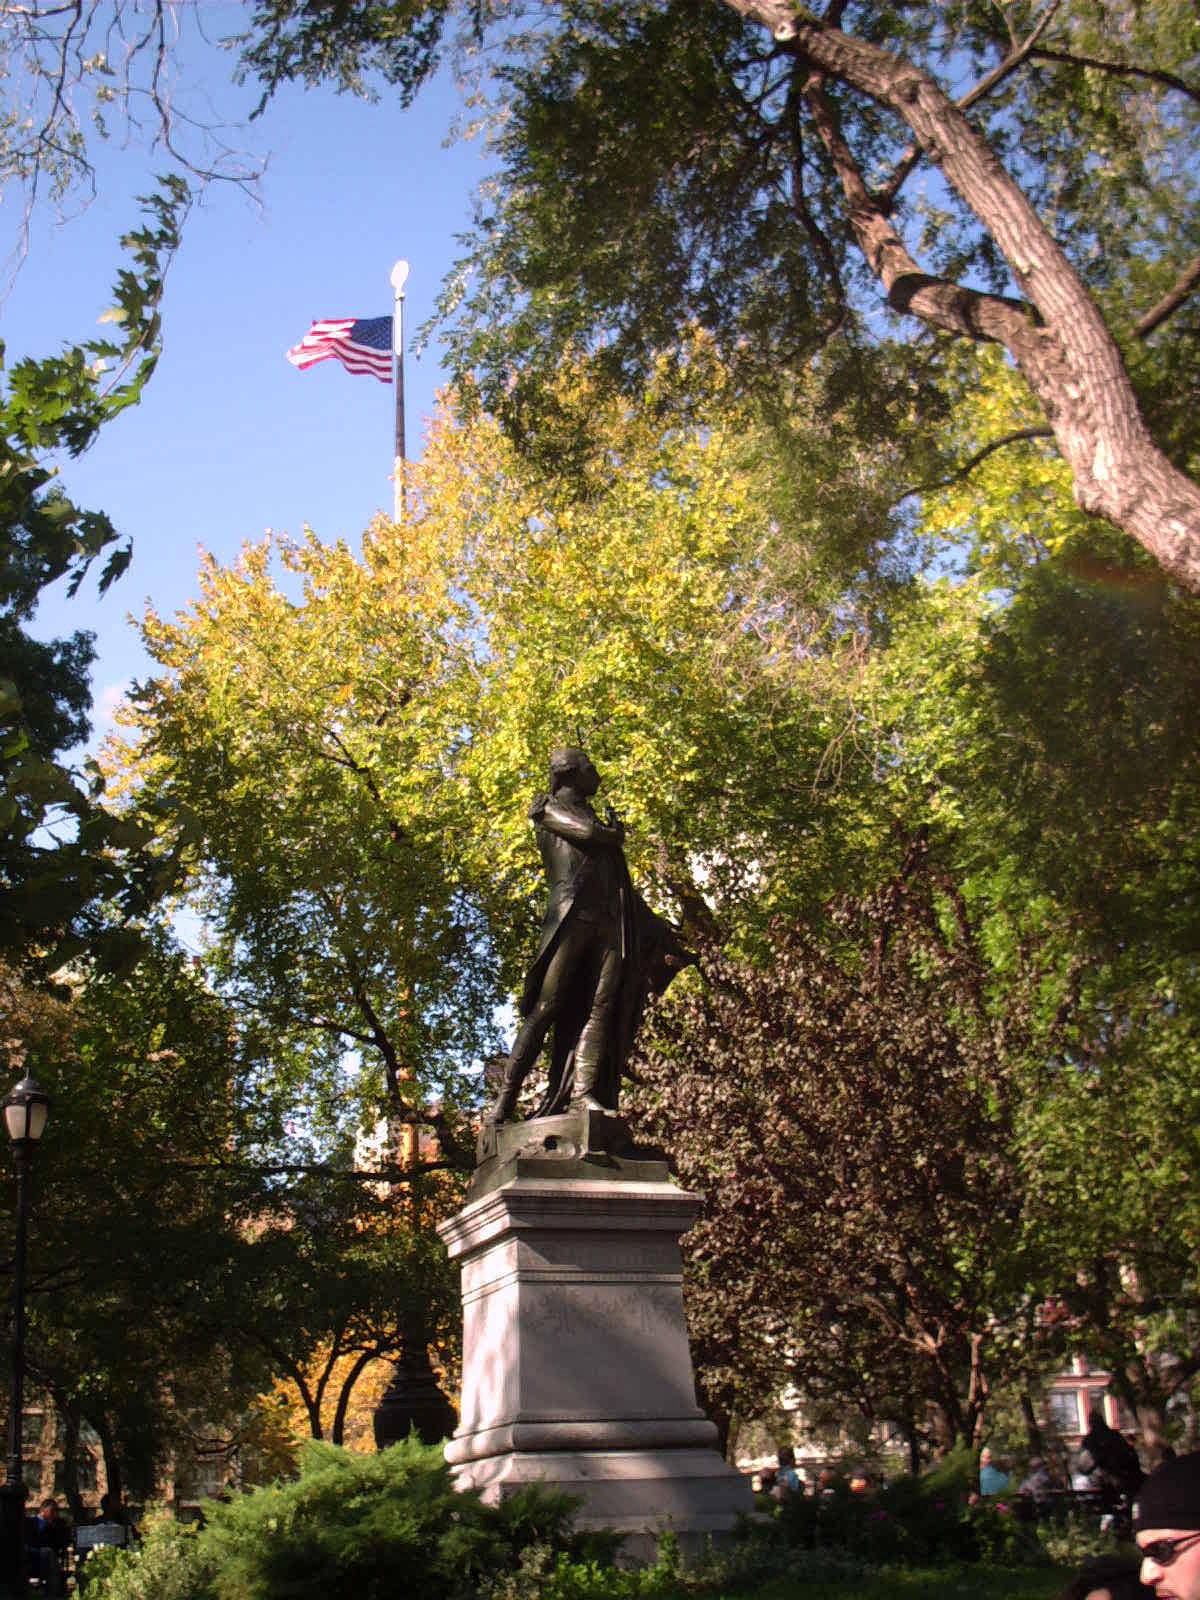 Lafayette at Union Square